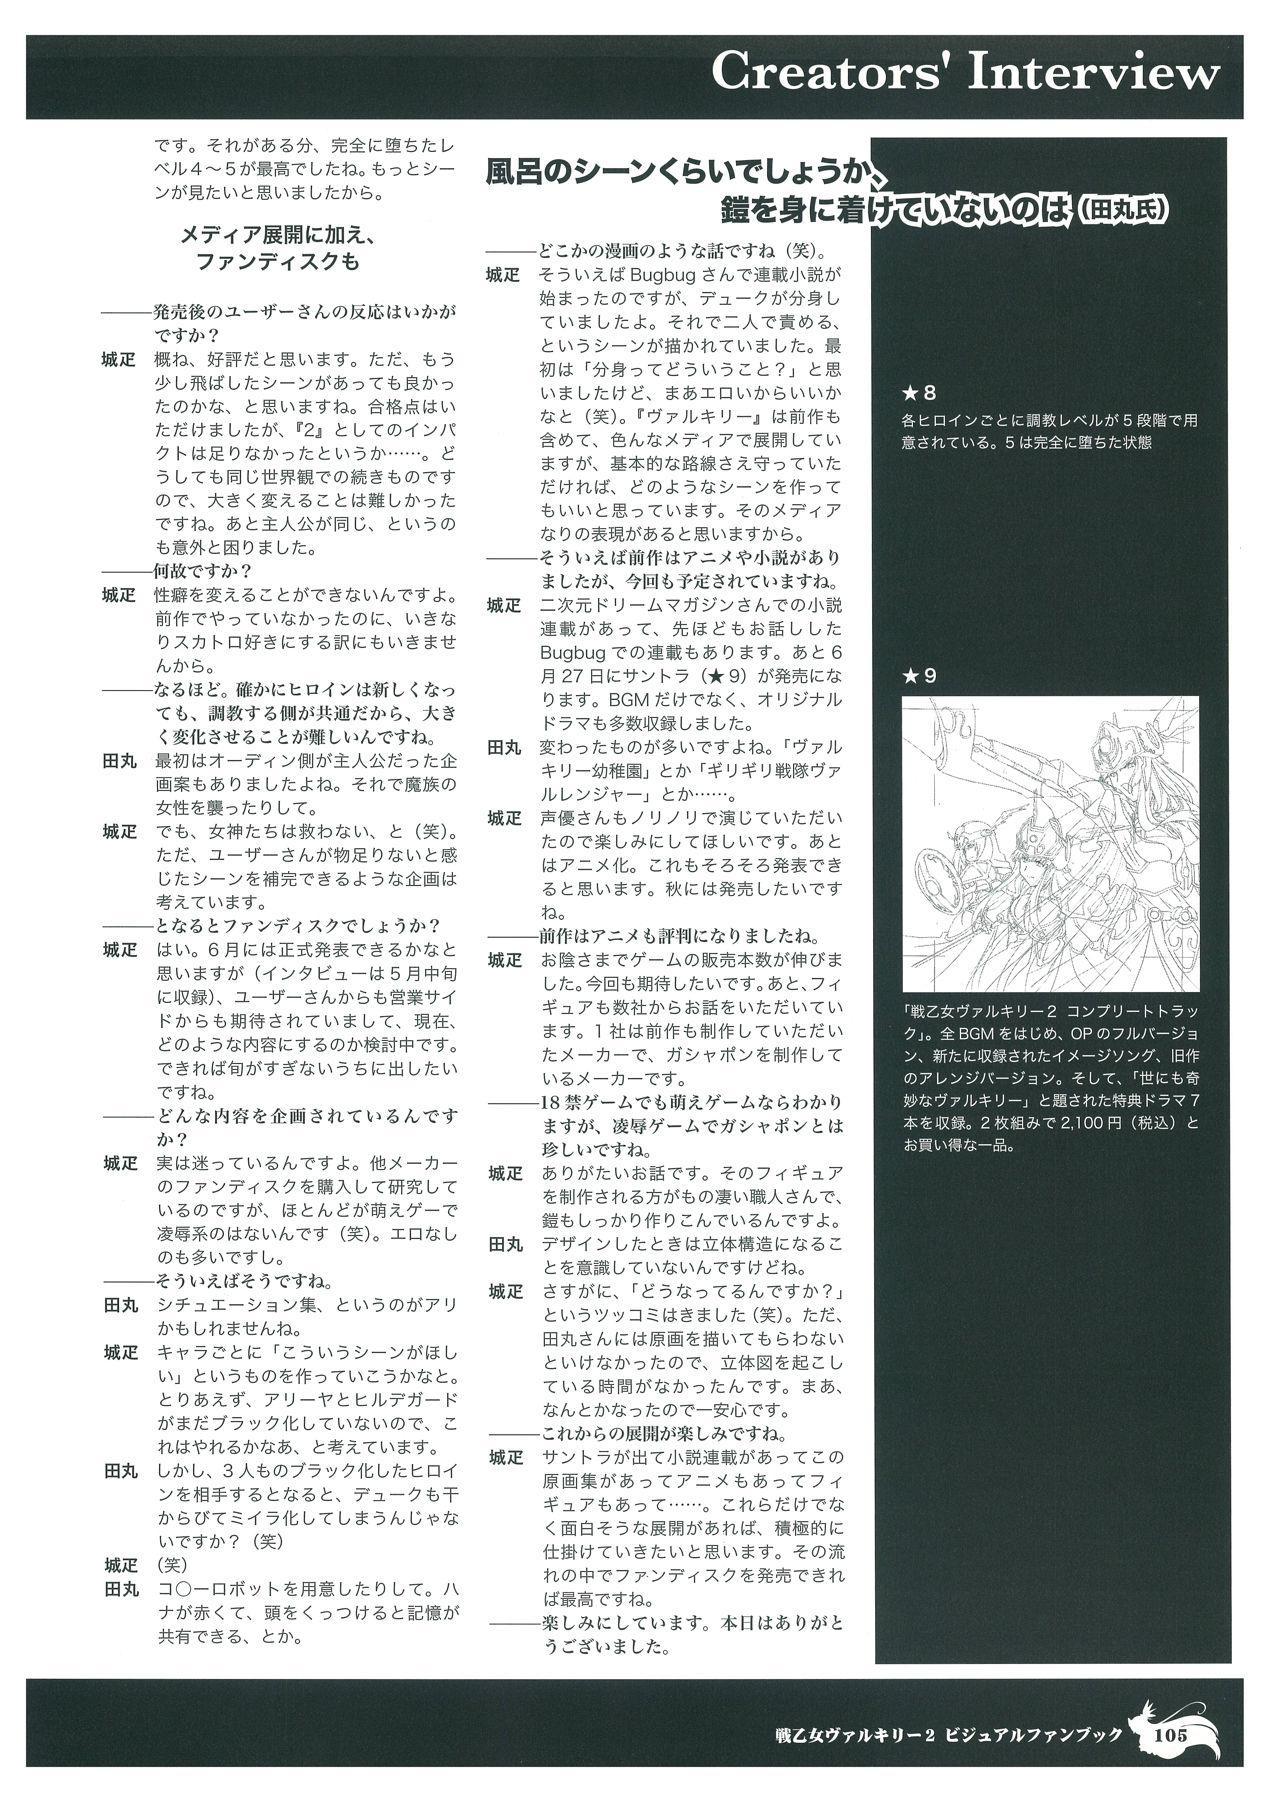 Ikusa Otome Valkyrie 2 Visual Fanbook 107